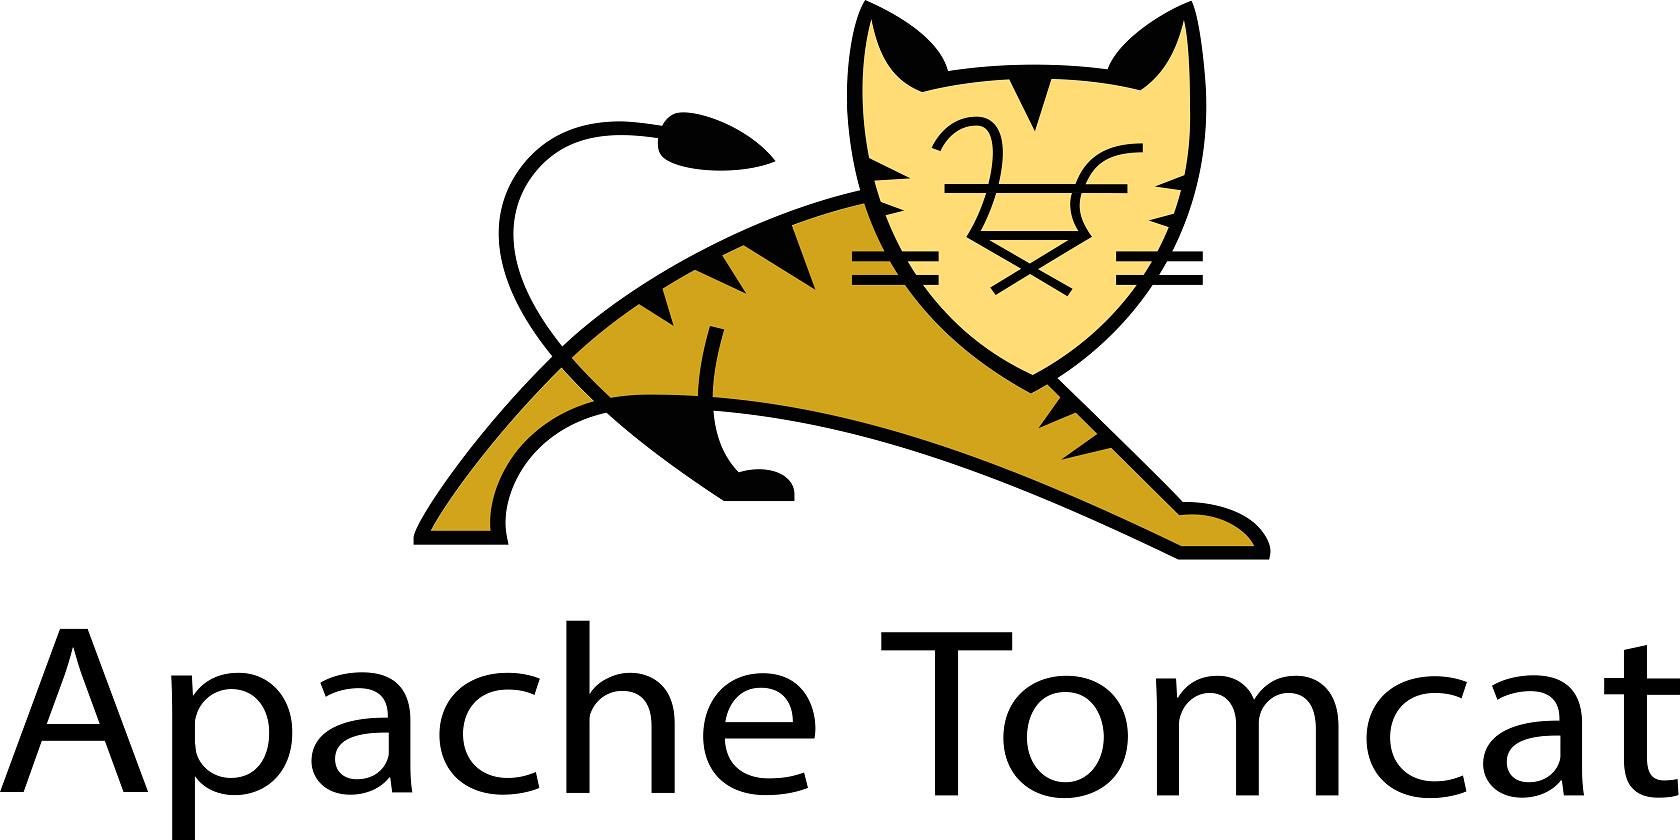 tomcat apache server download